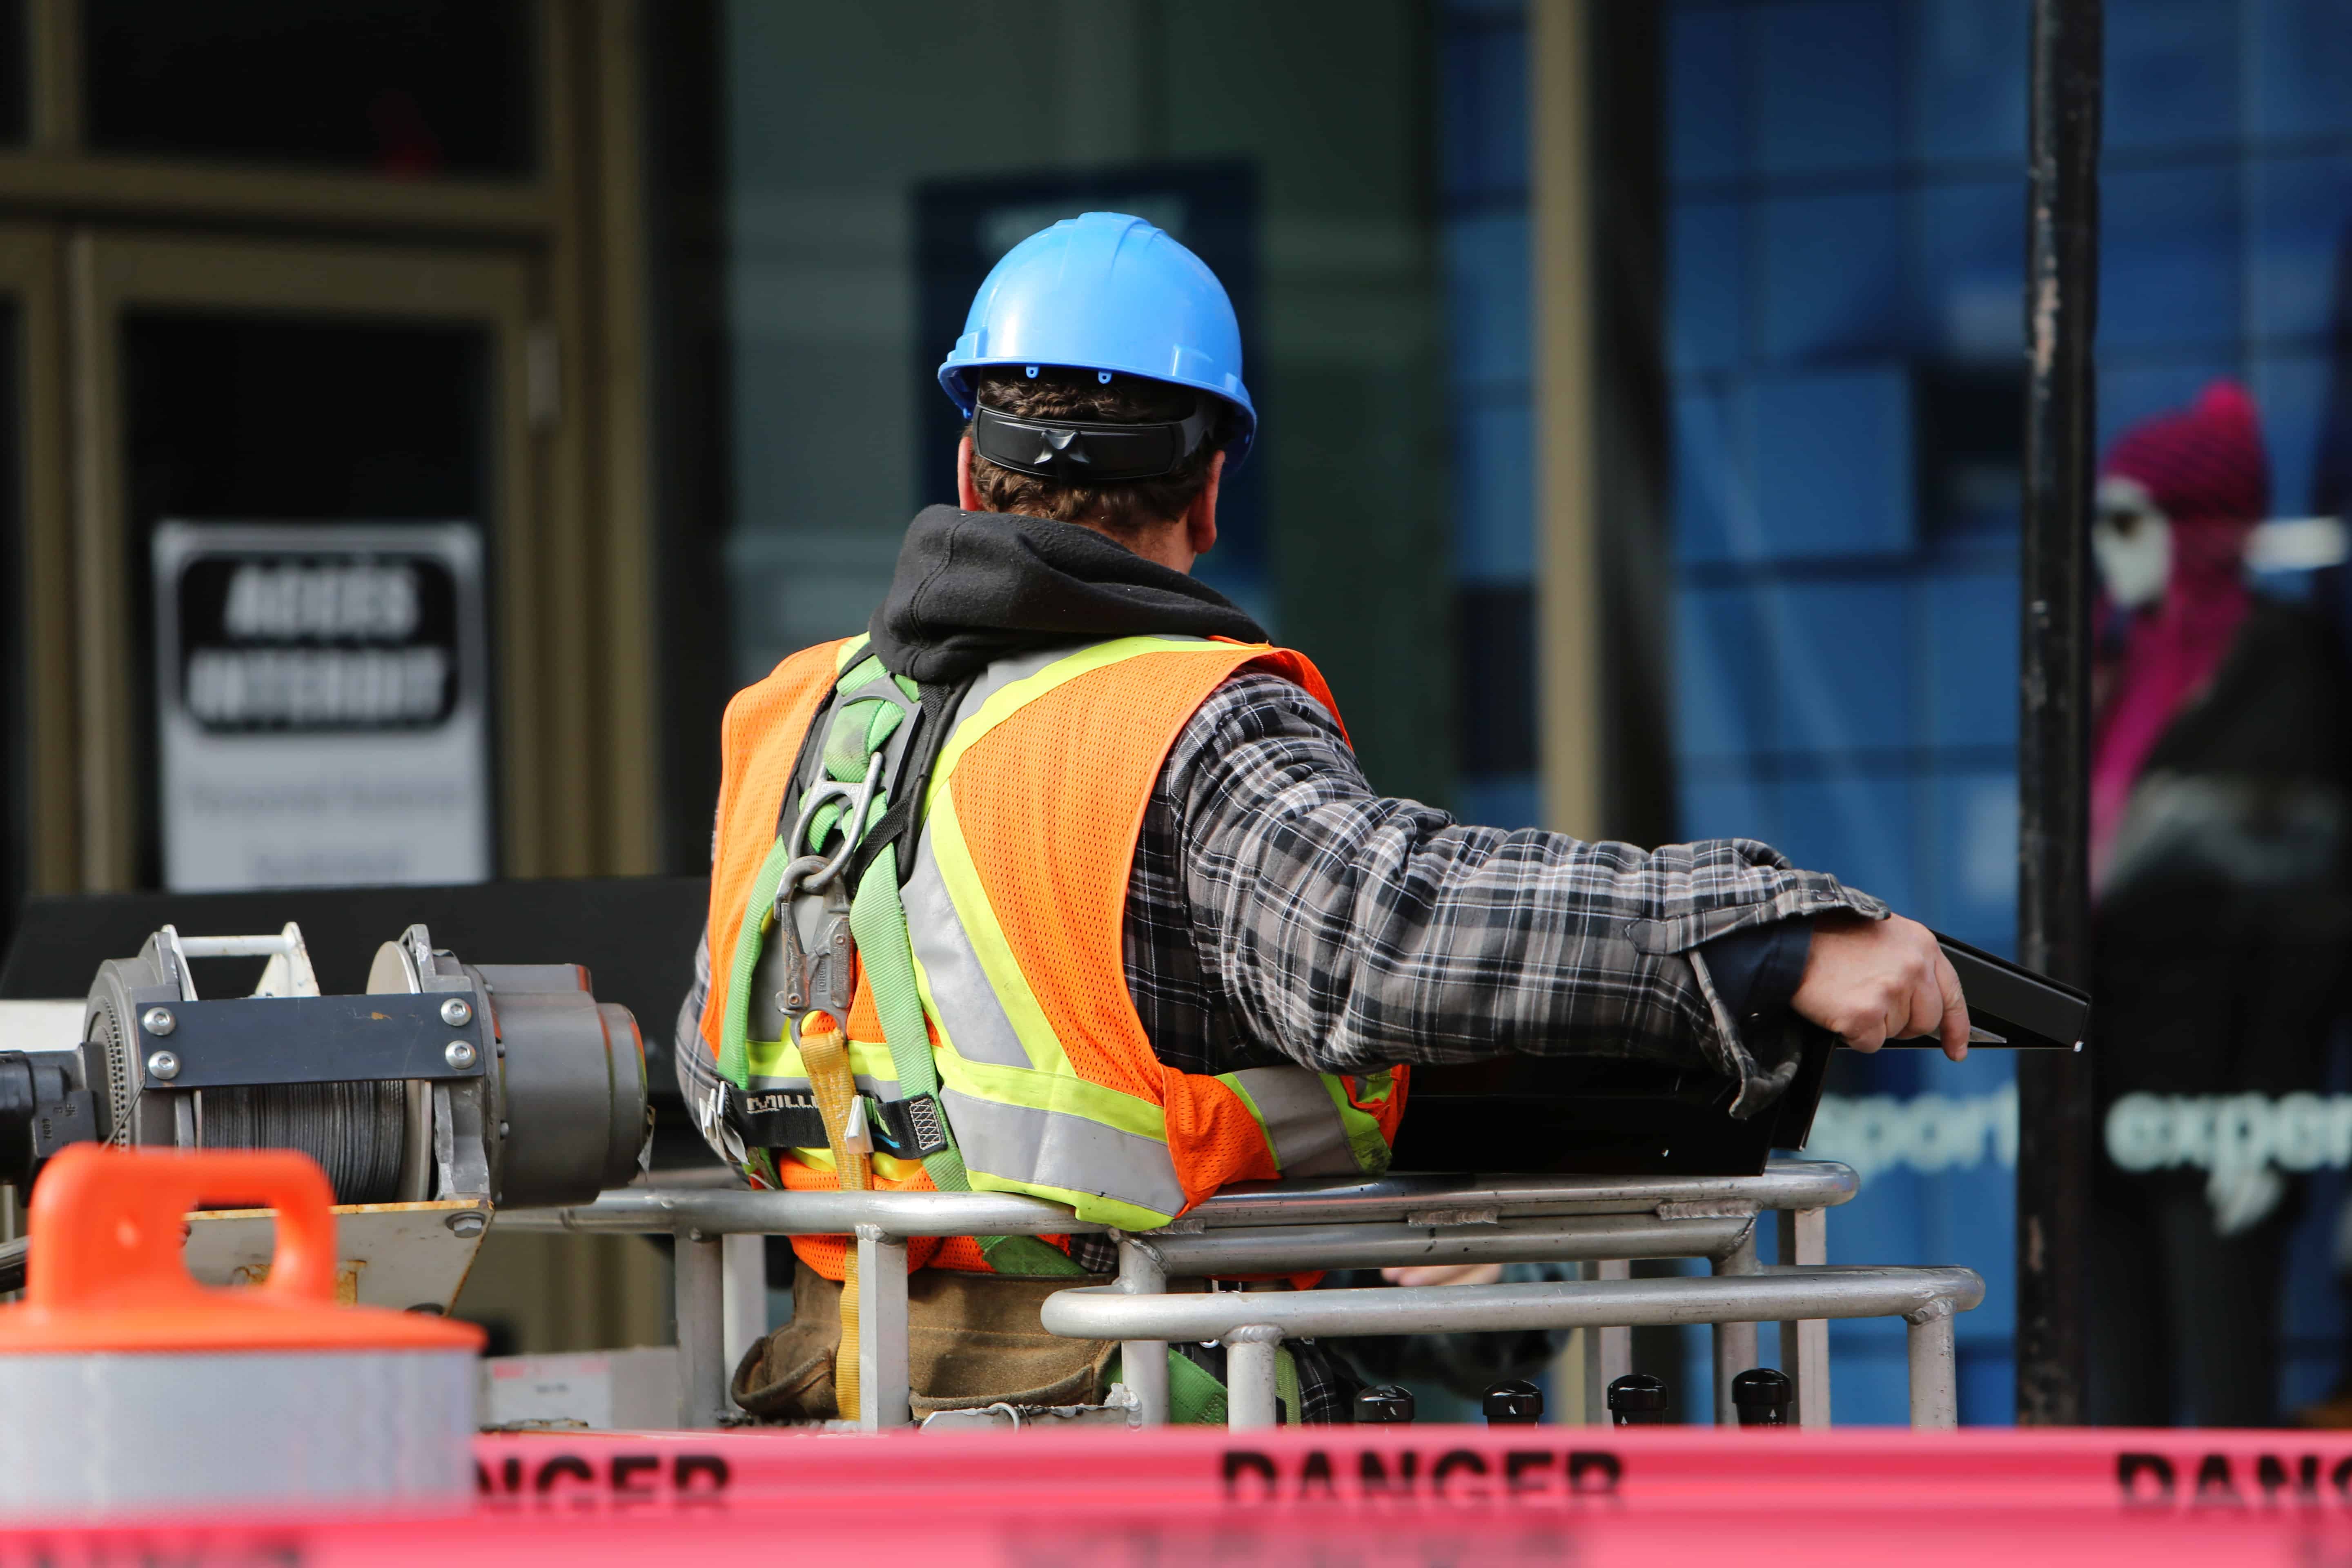 construction-worker-danger-safety-8159 (1).jpg